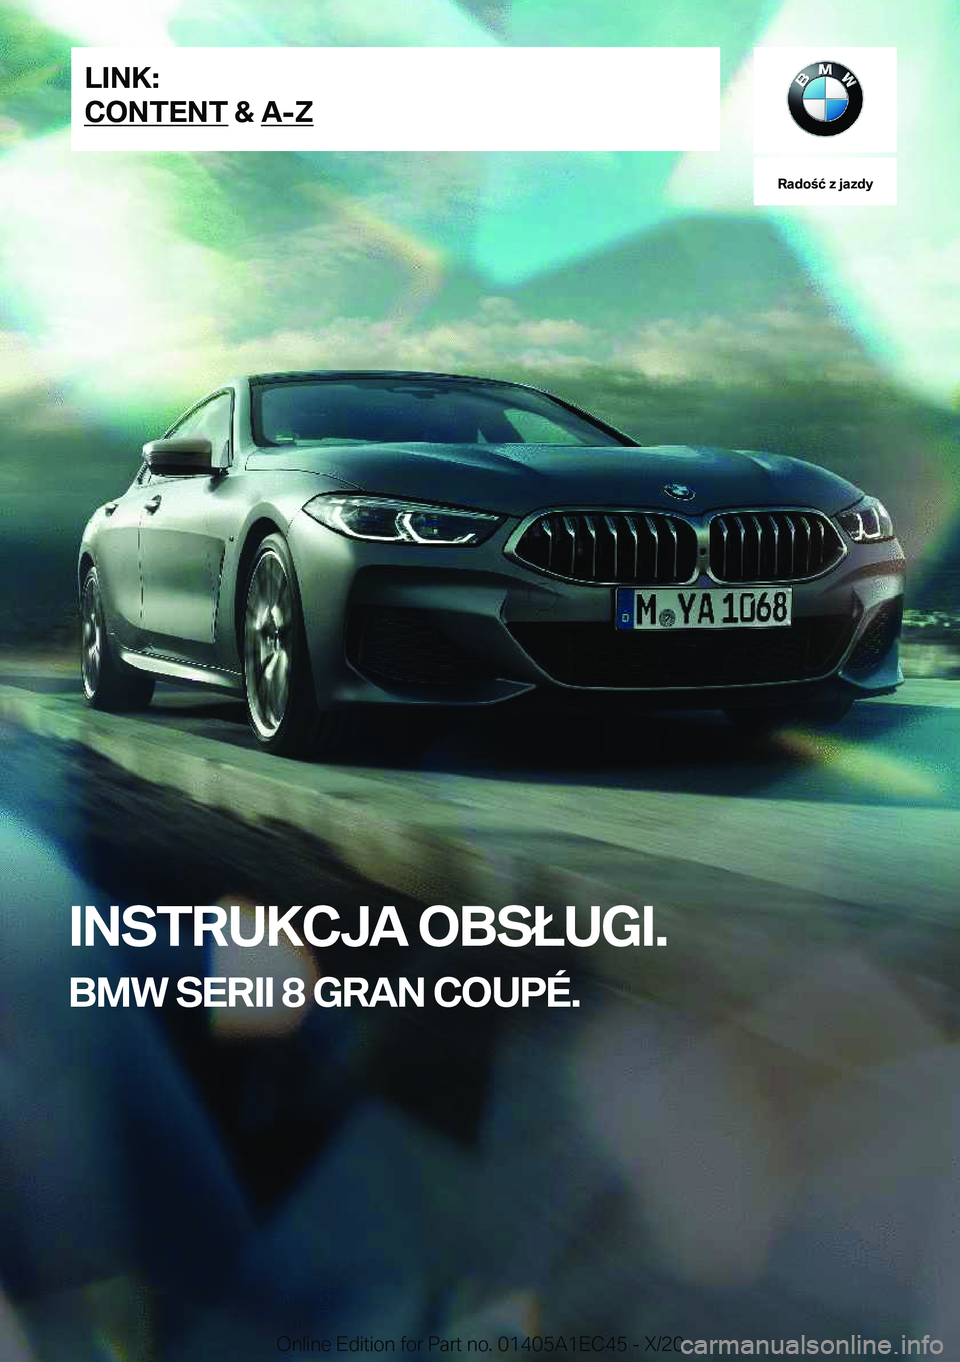 BMW 8 SERIES GRAN COUPE 2021  Instrukcja obsługi (in Polish) �R�a�d�o�ć��z��j�a�z�d�y
�I�N�S�T�R�U�K�C�J�A��O�B�S�Ł�U�G�I�.
�B�M�W��S�E�R�I�I��8��G�R�A�N��C�O�U�P�